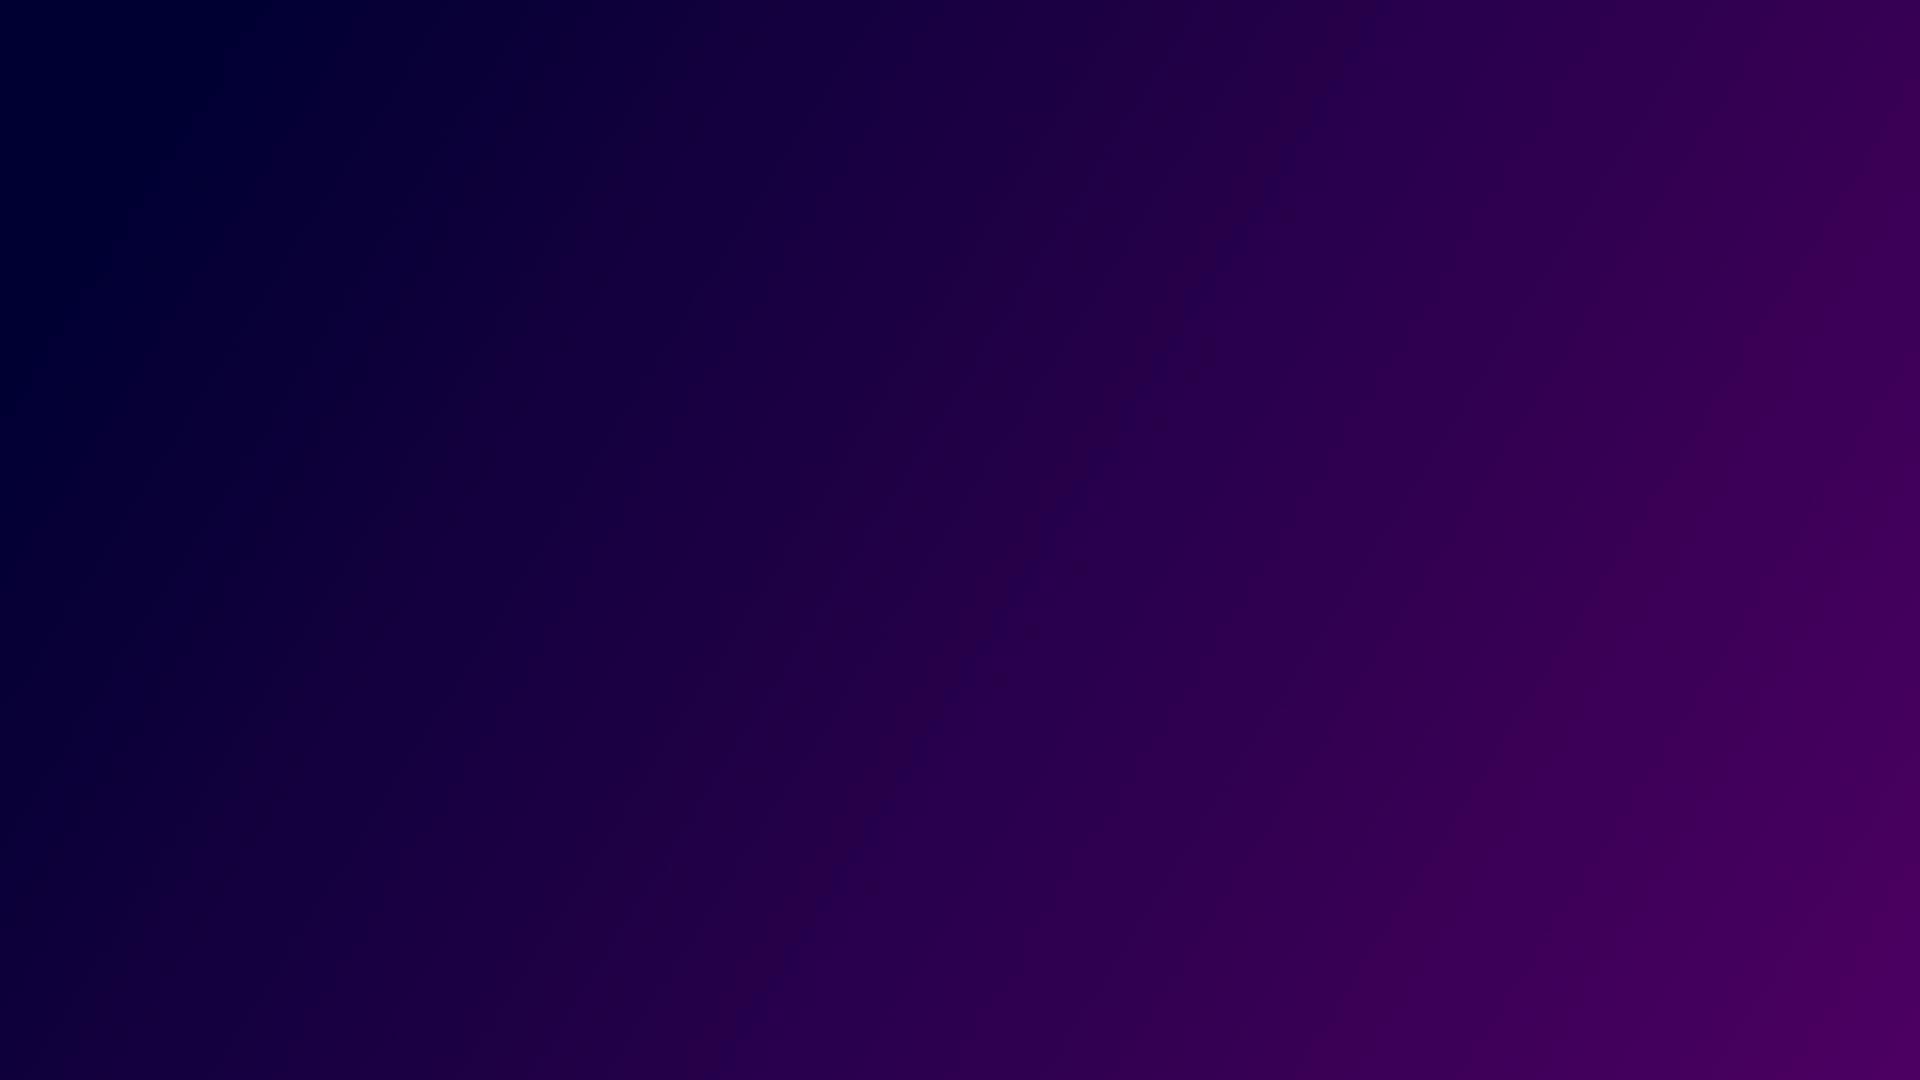 General 1920x1080 minimalism simple background gradient purple background